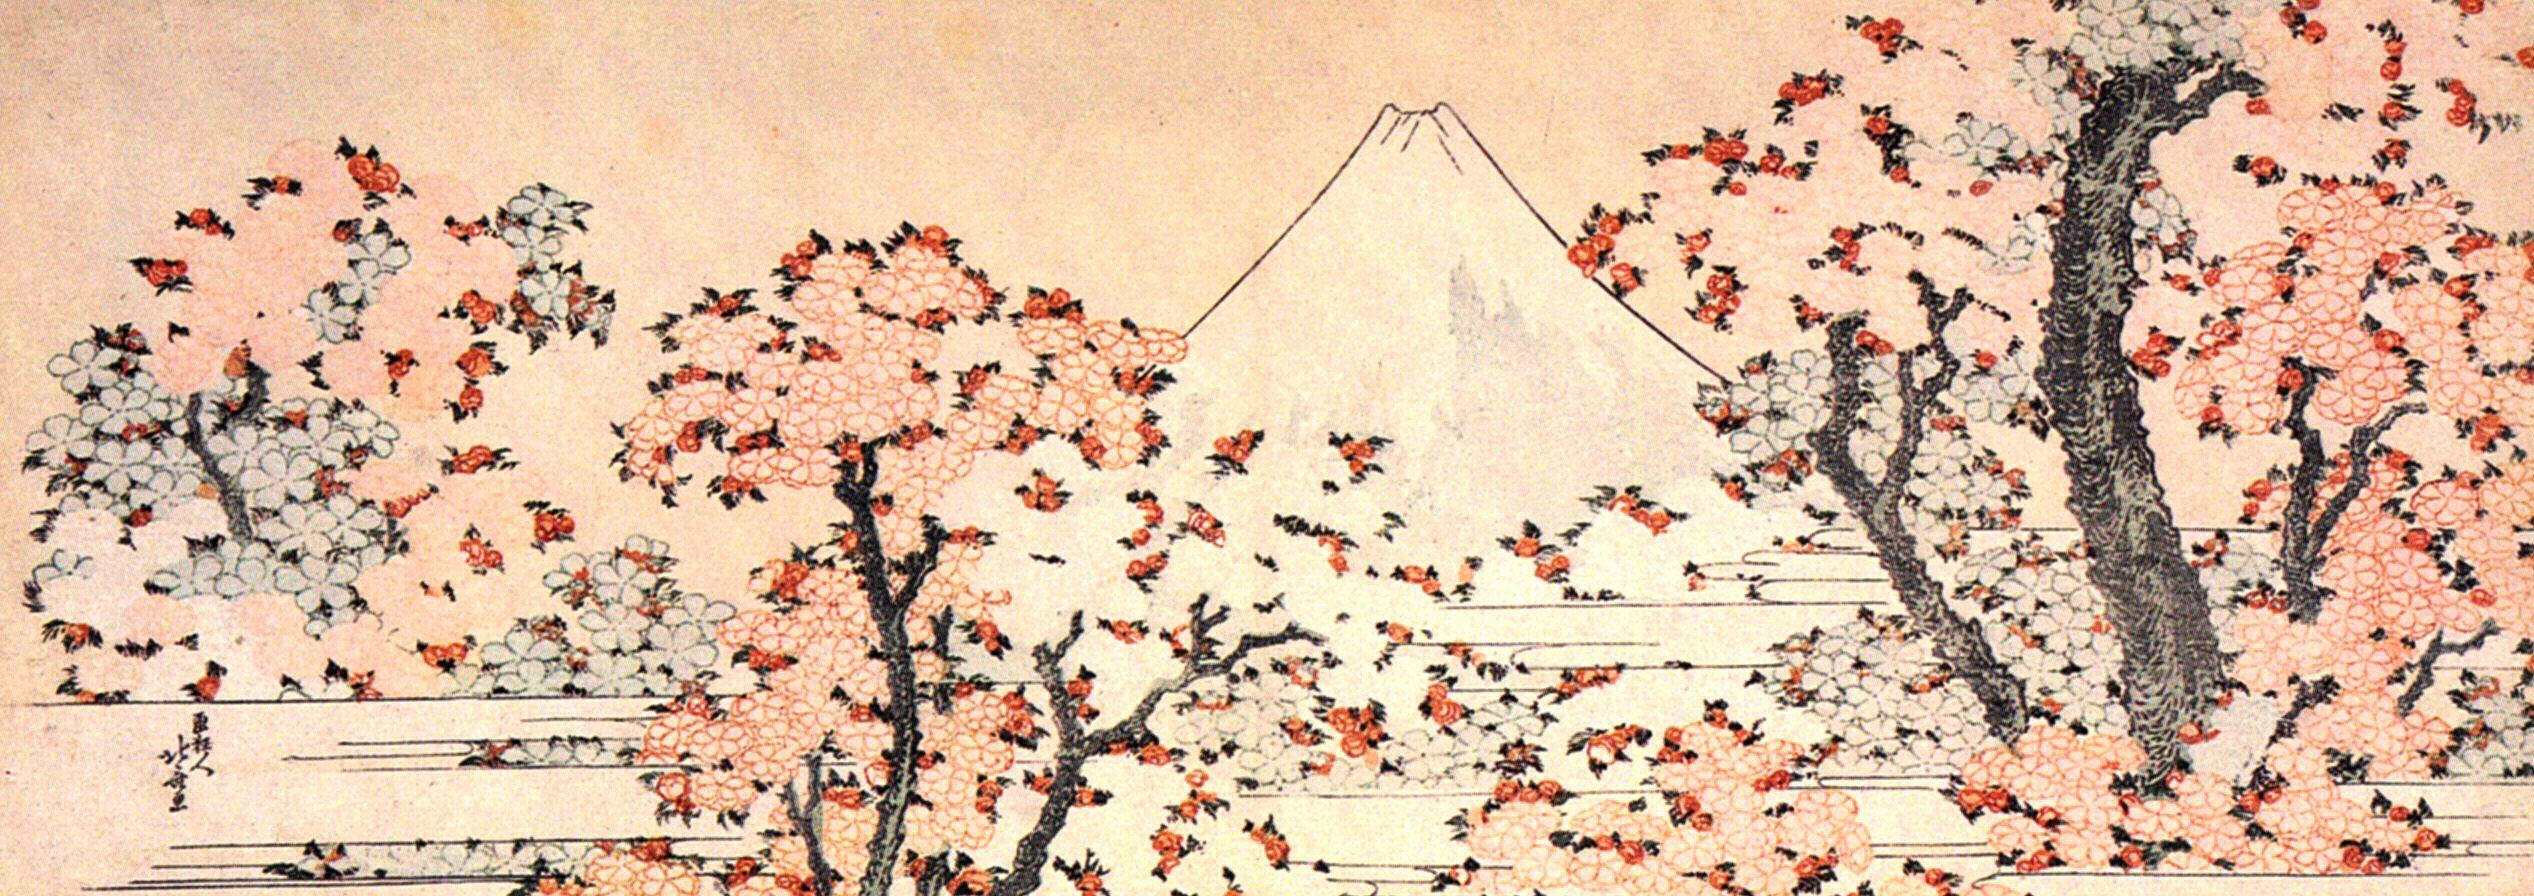 Картинка Фотокартина - деревья сакуры и вулкан  3